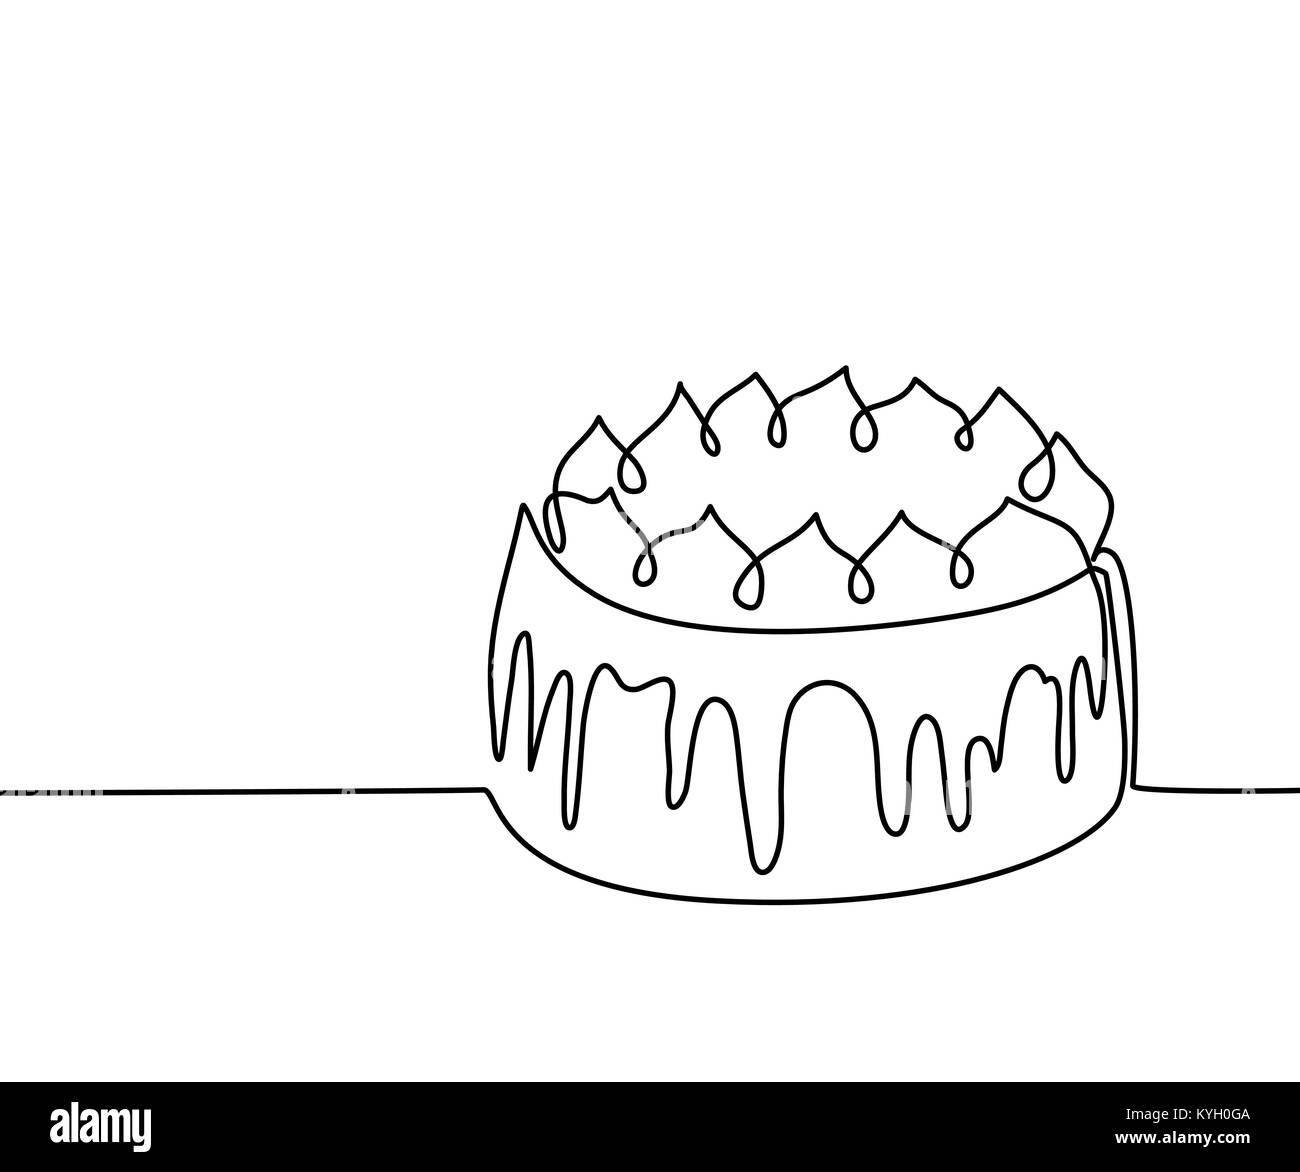 Dessin de ligne continu de grand gâteau Illustration de Vecteur